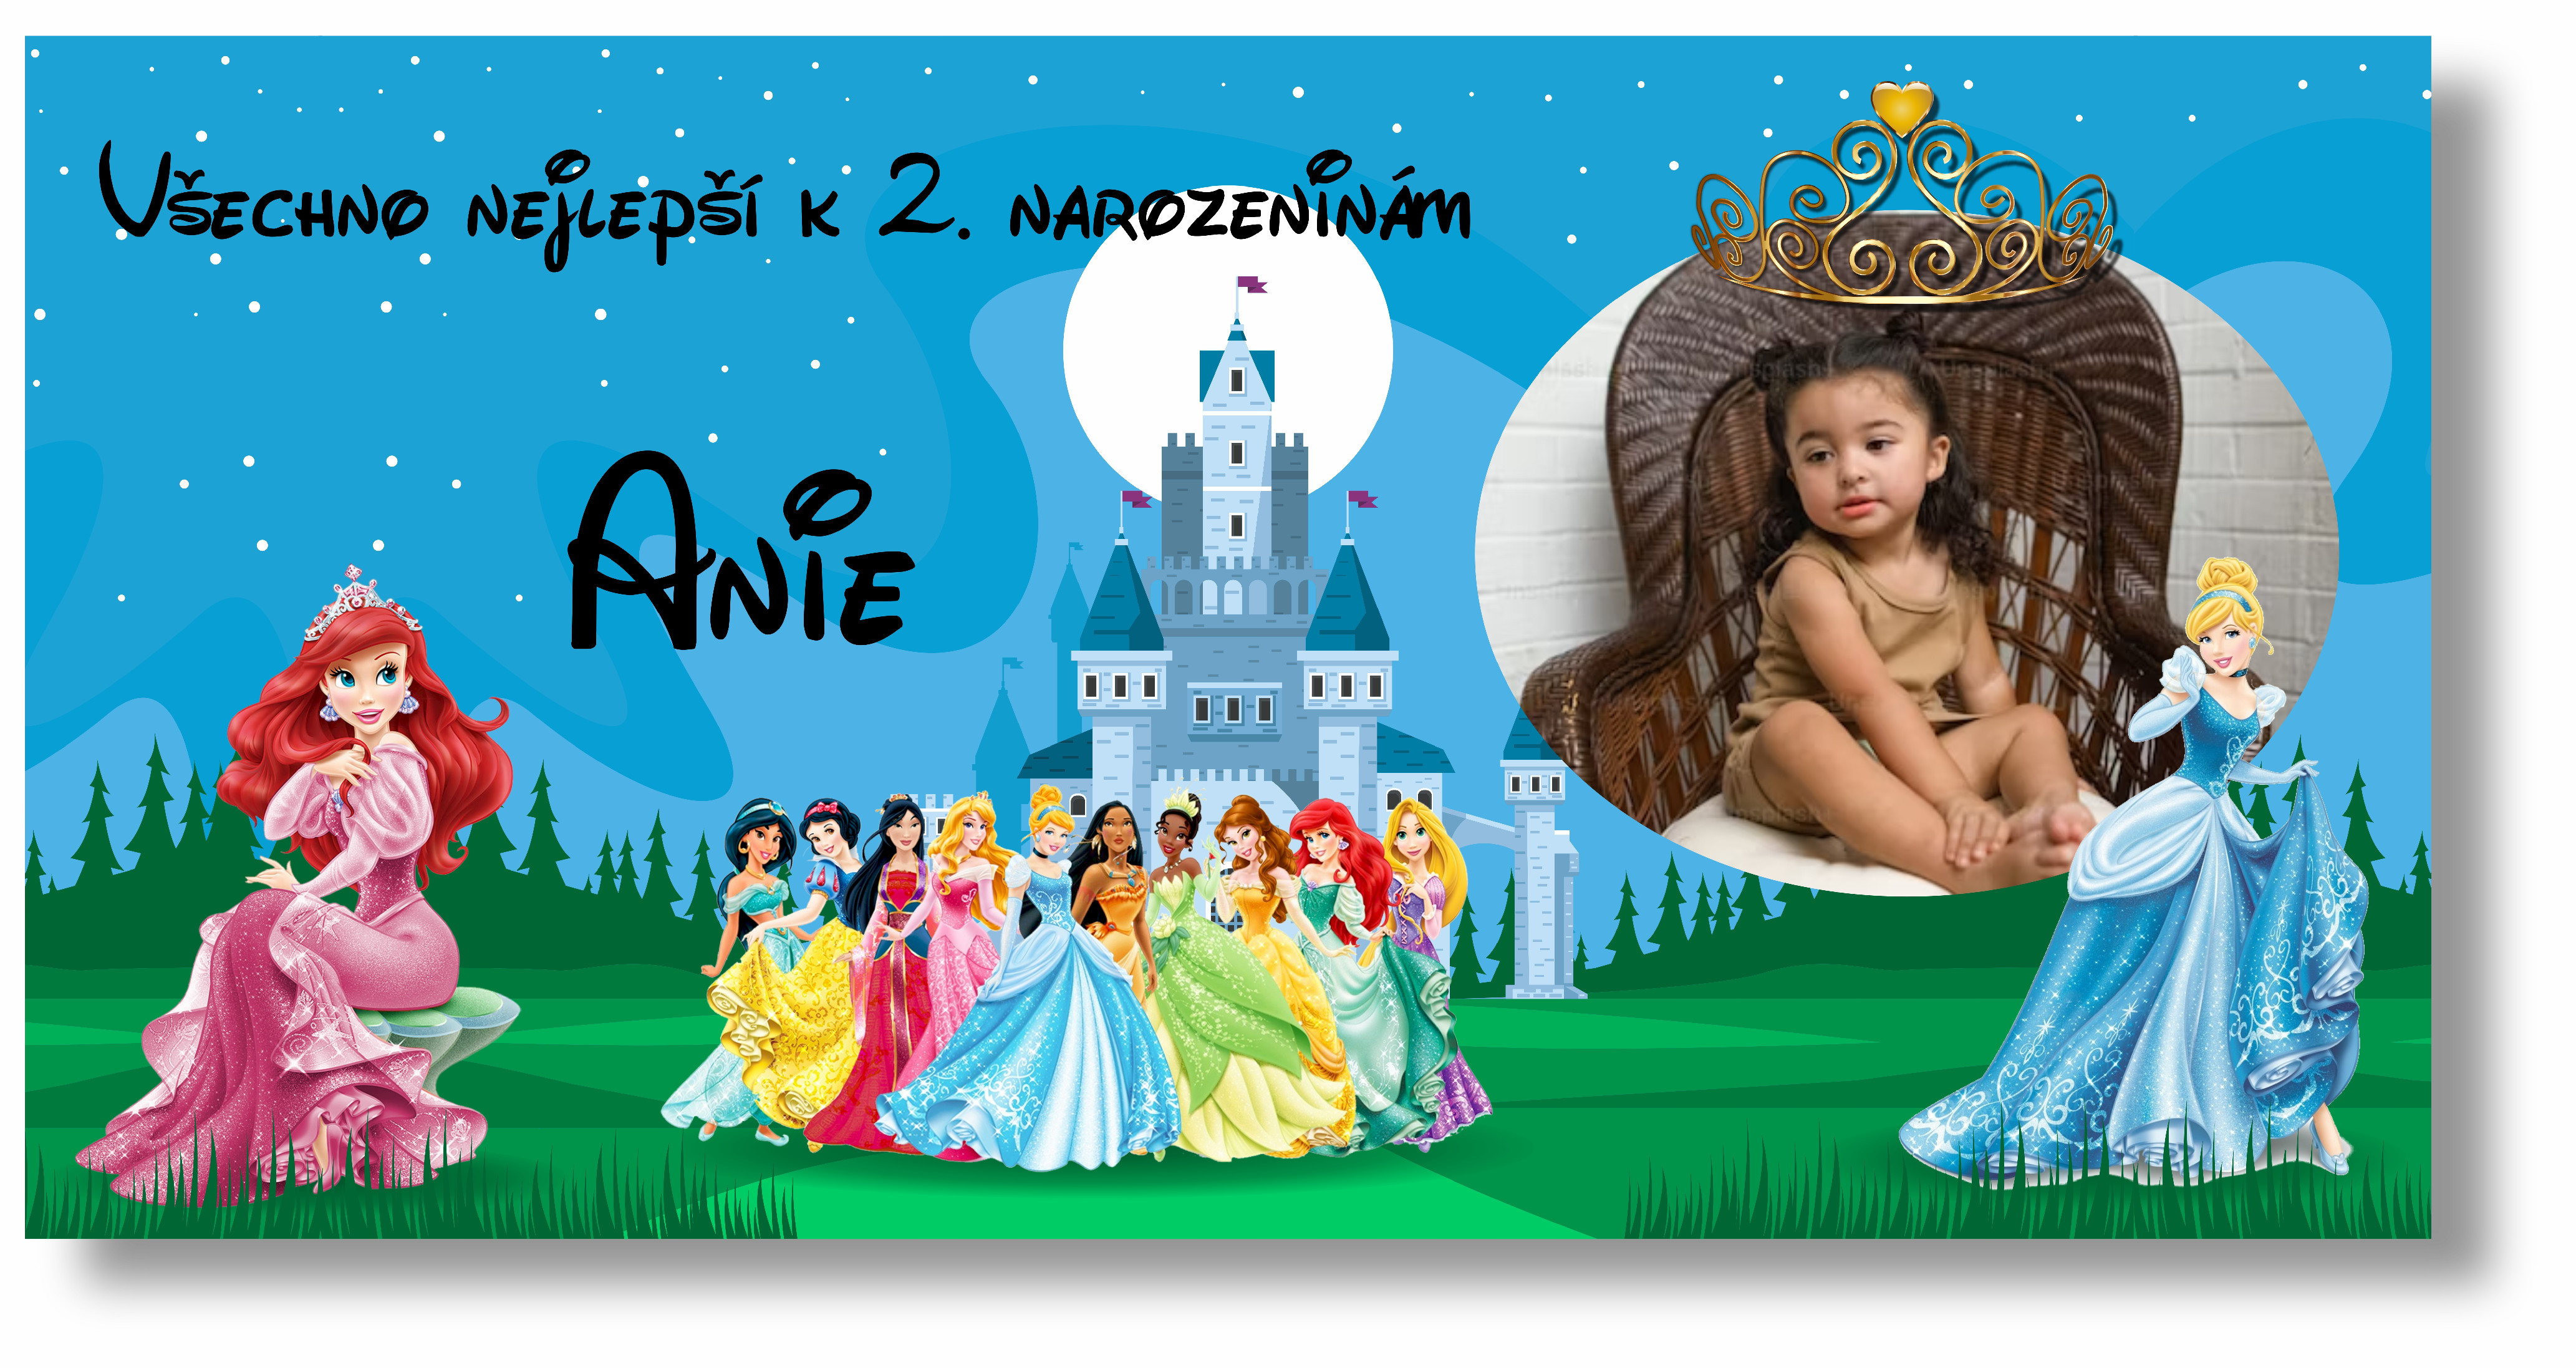 Personal Narozeninový banner s fotografií - Disney Princess Rozmer banner: 130 x 260 cm